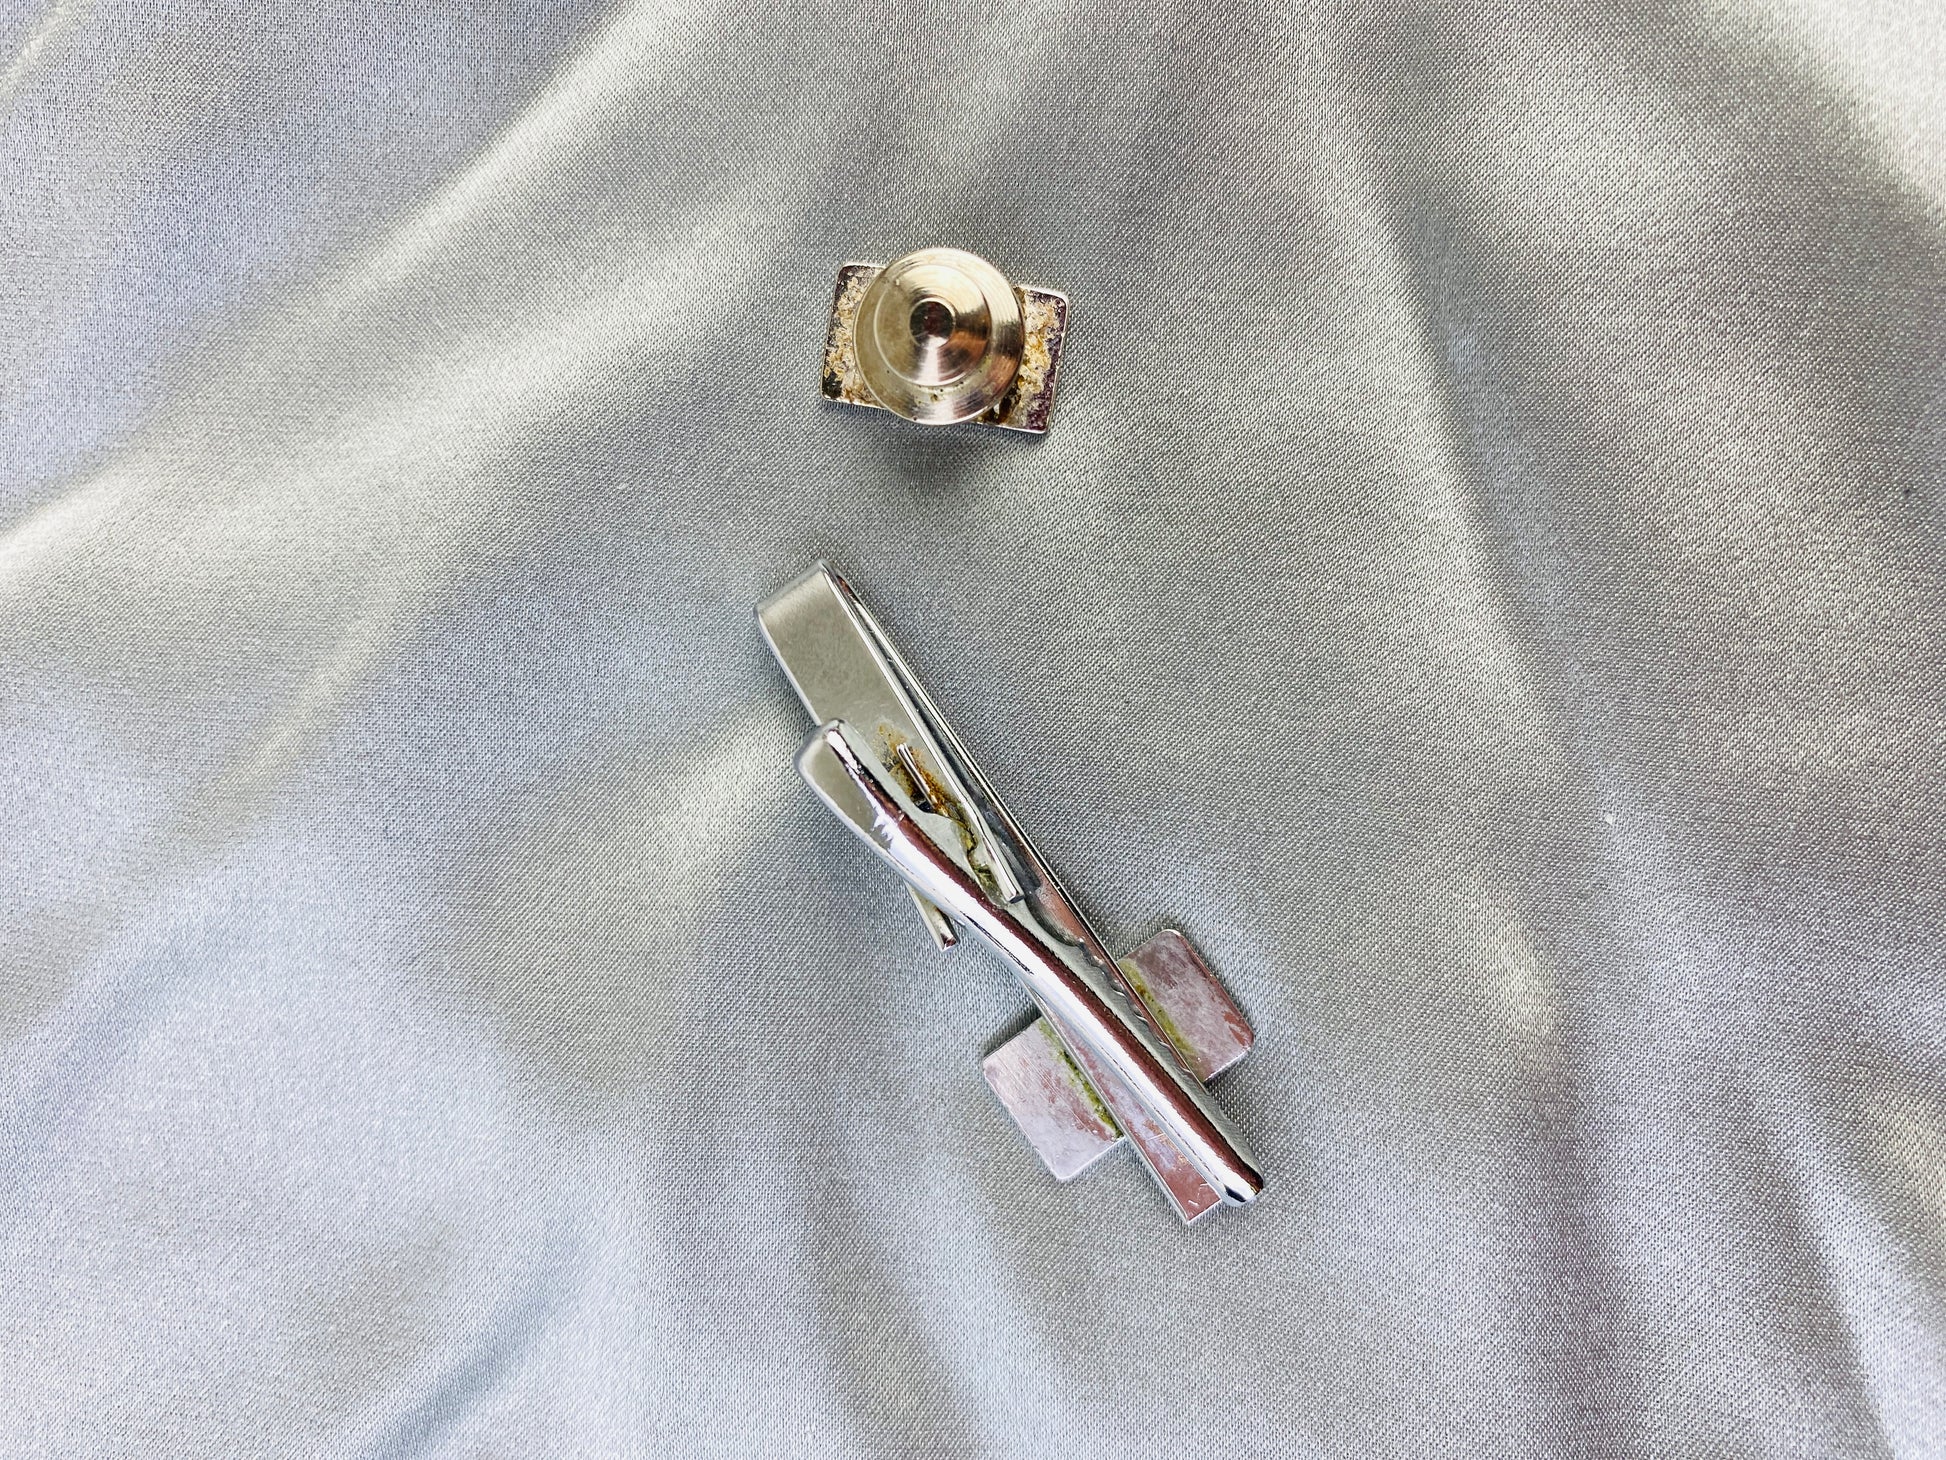 Vintage Rolls Royce Silver Metal Lapel Pin and Blue Tie Bar, 2 Piece